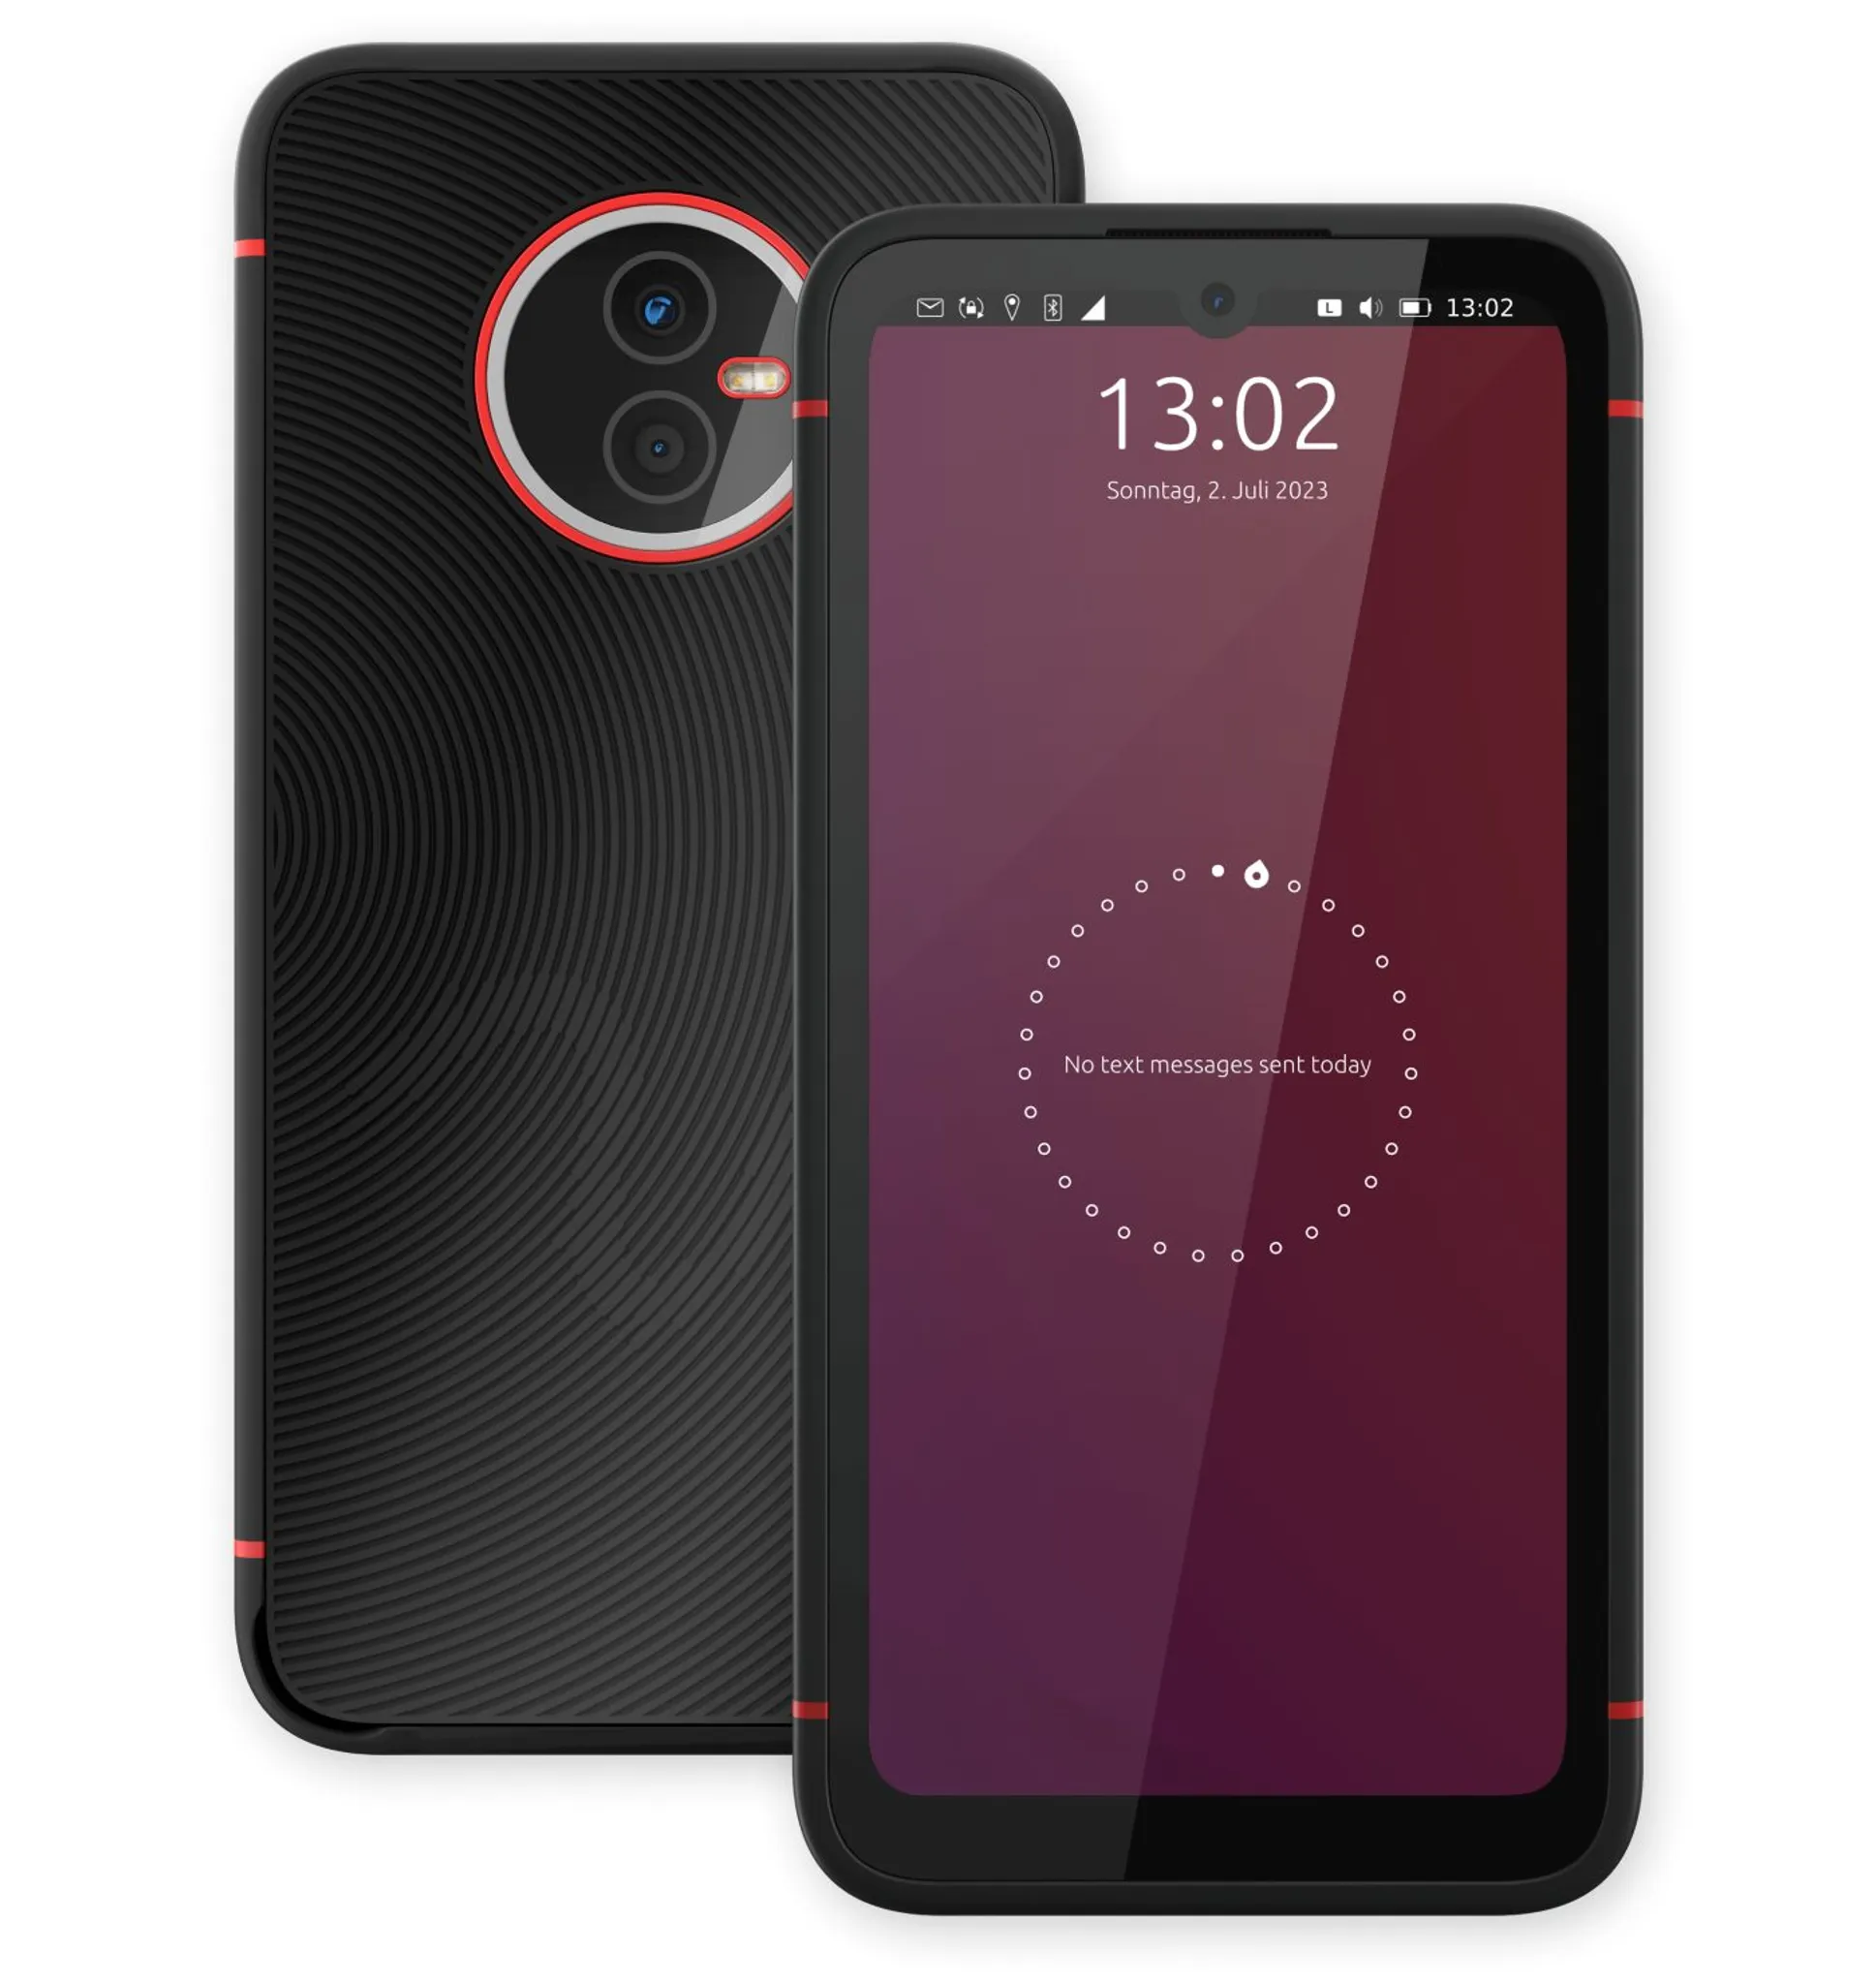 X23 Volla mit – Phone Touch Smartphone Ubuntu